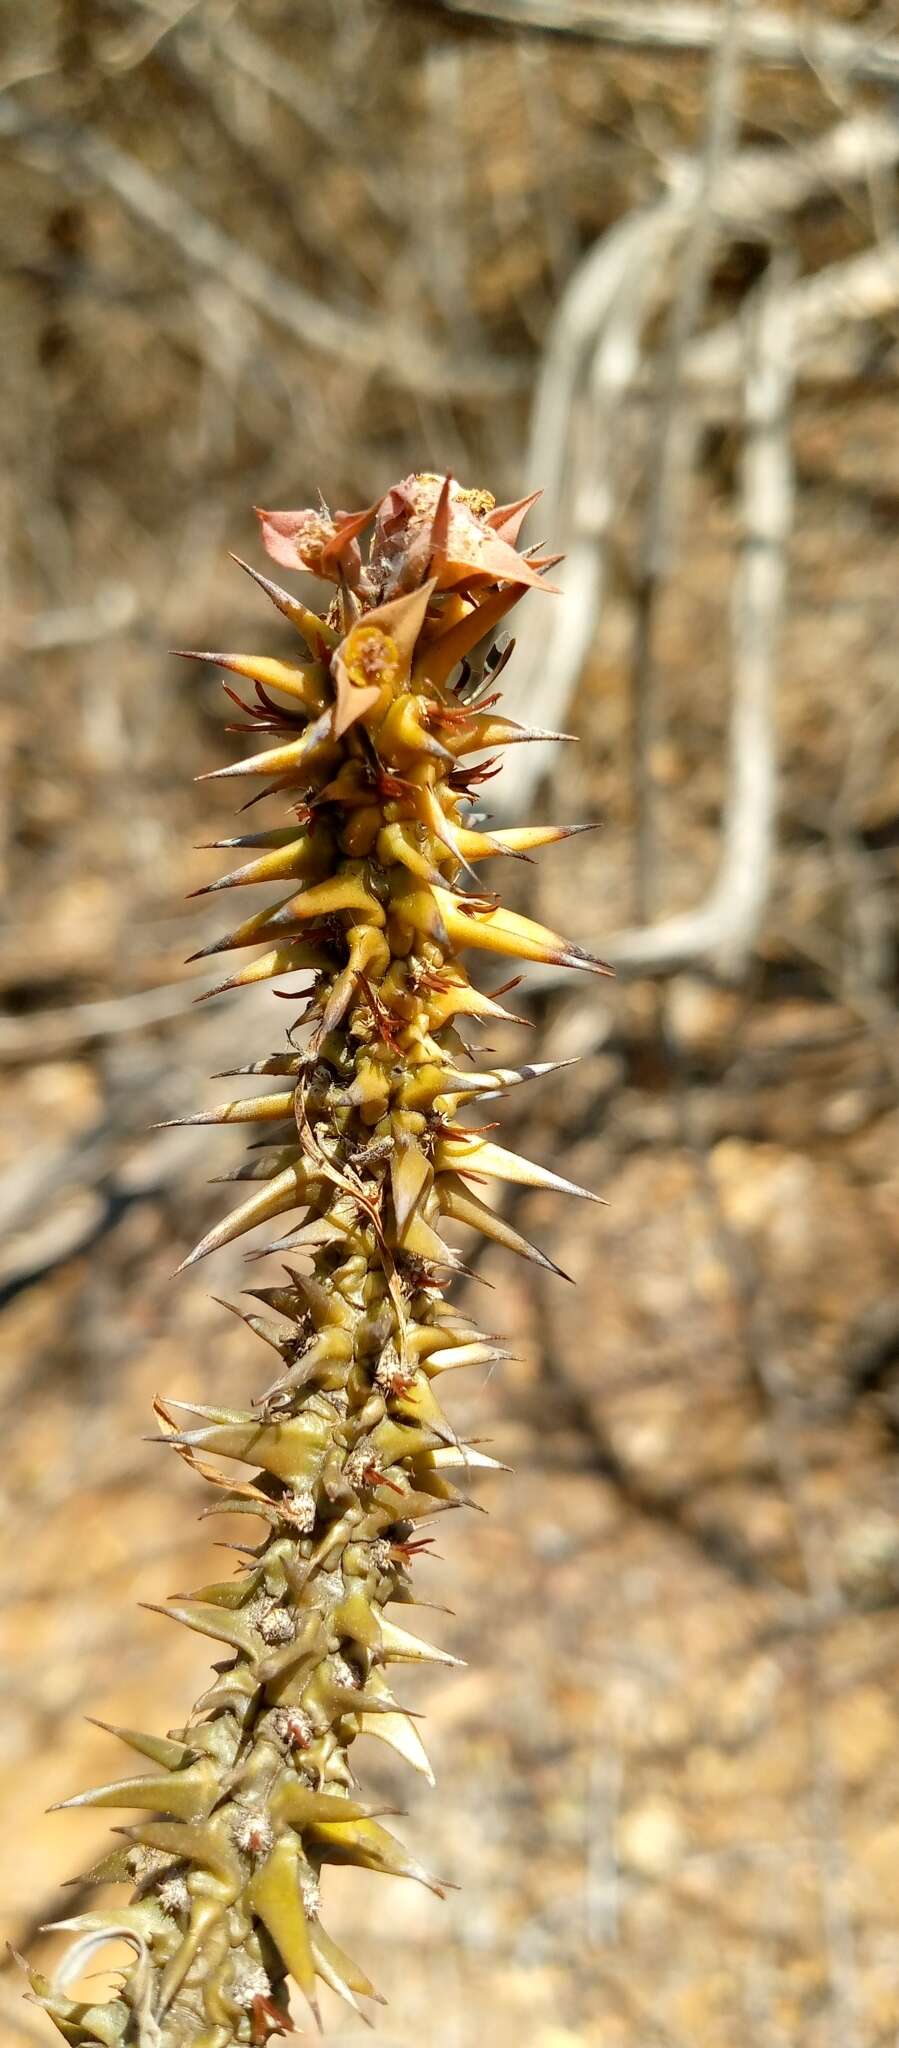 Image of Euphorbia rossii Rauh & Buchloh